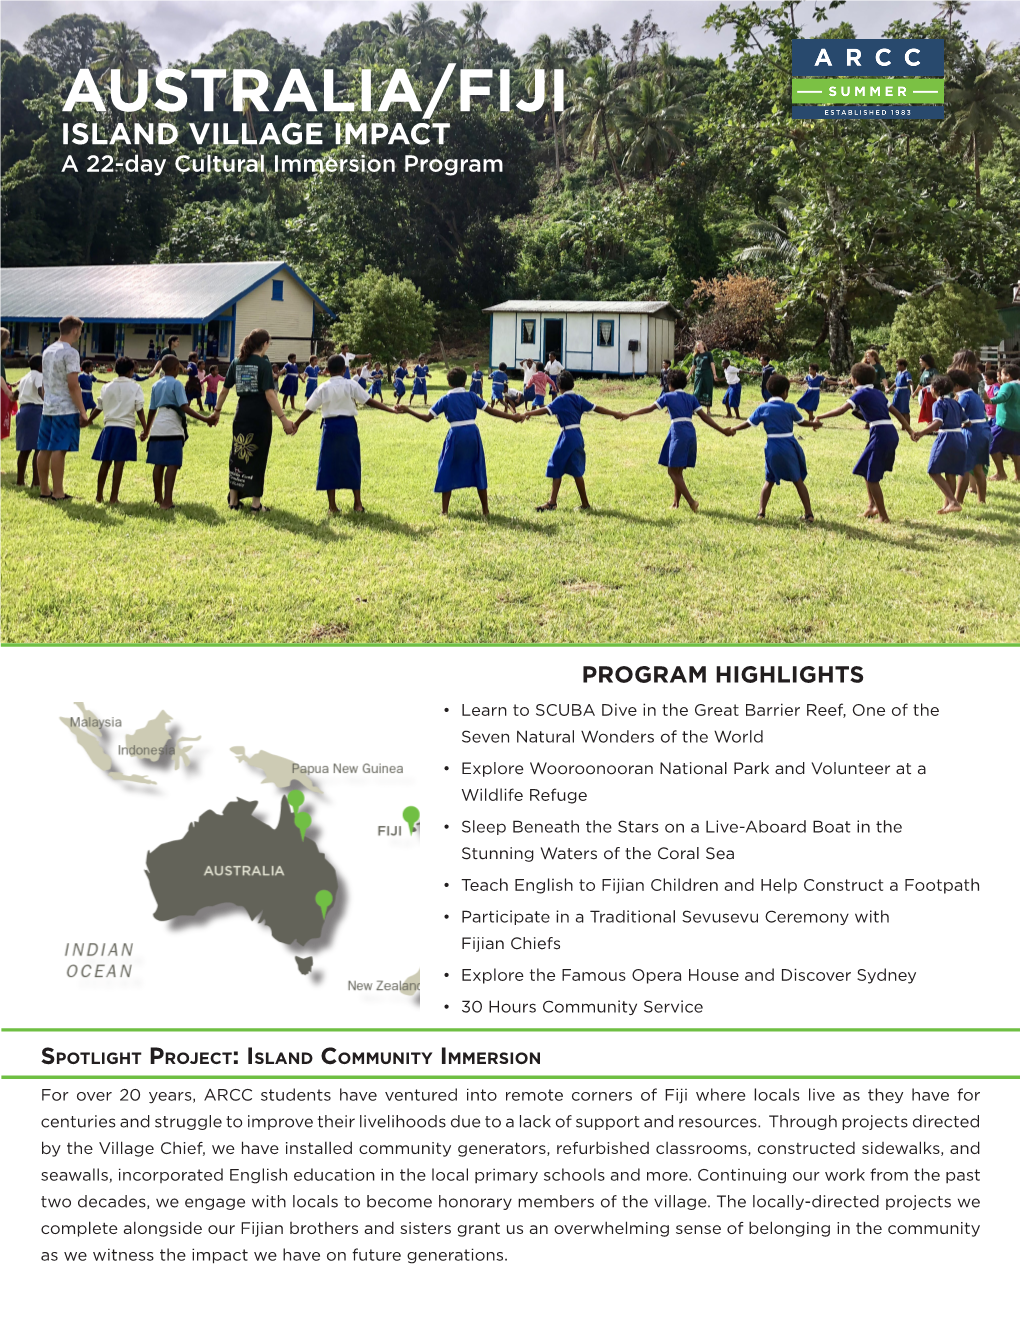 AUSTRALIA/FIJI ISLAND VILLAGE IMPACT a 22-Day Cultural Immersion Program